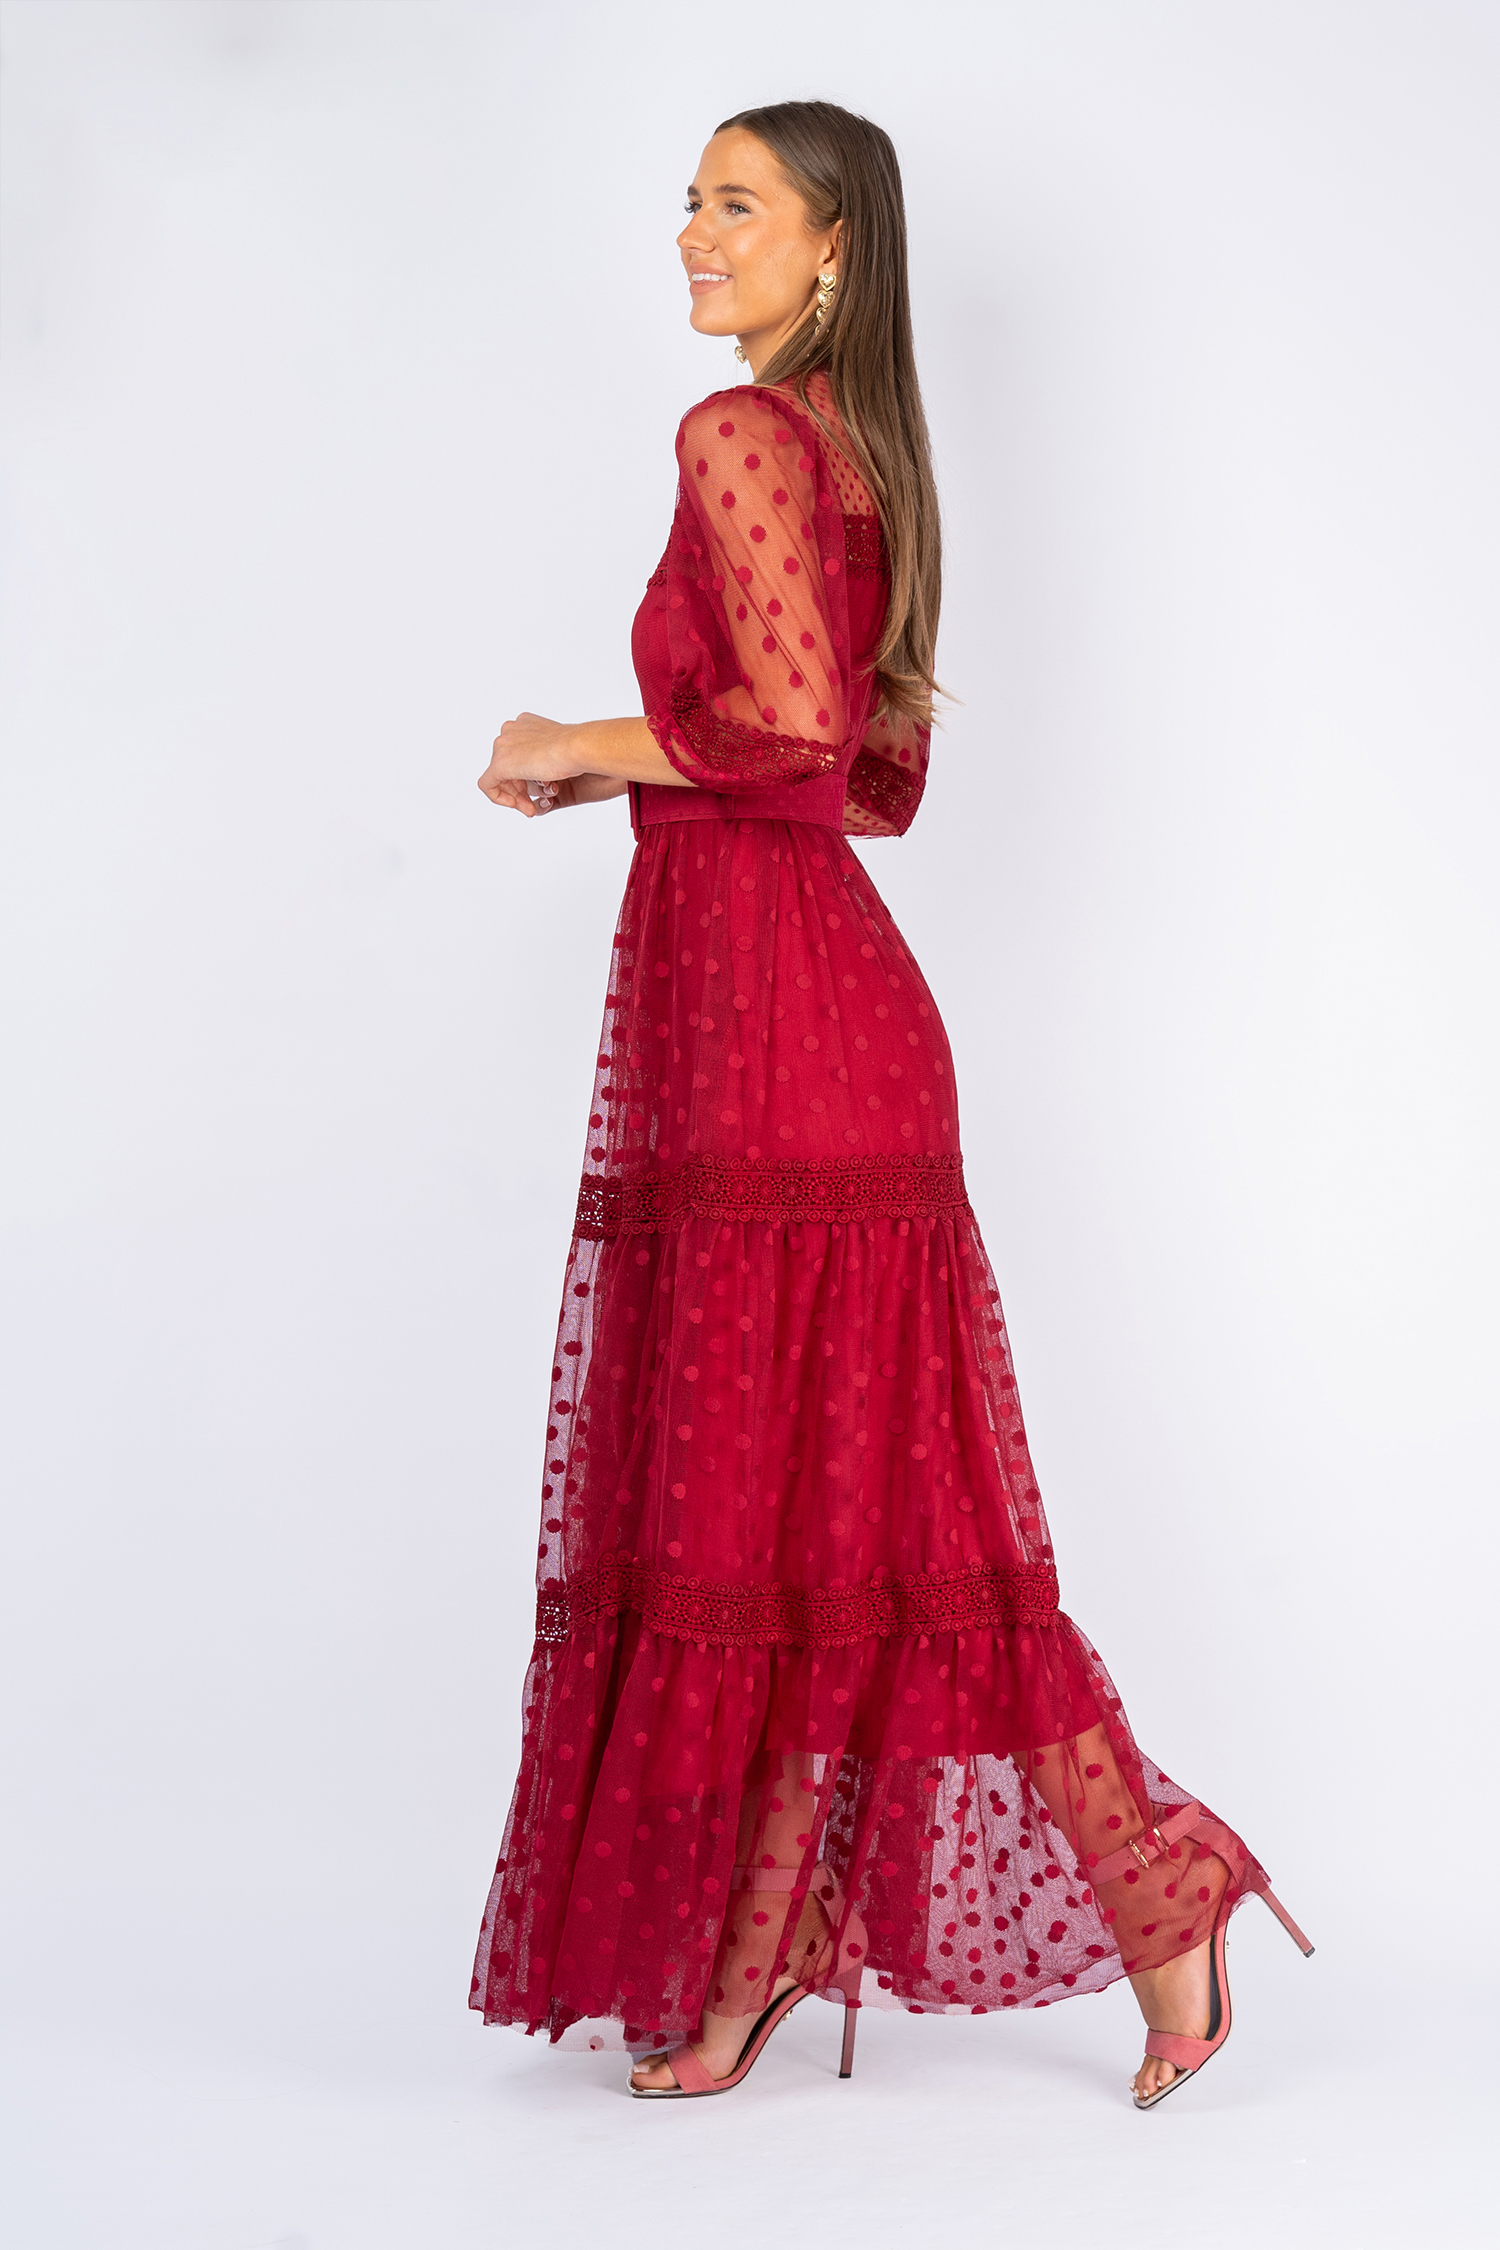 Meri Lace Detail Burgundy Dress